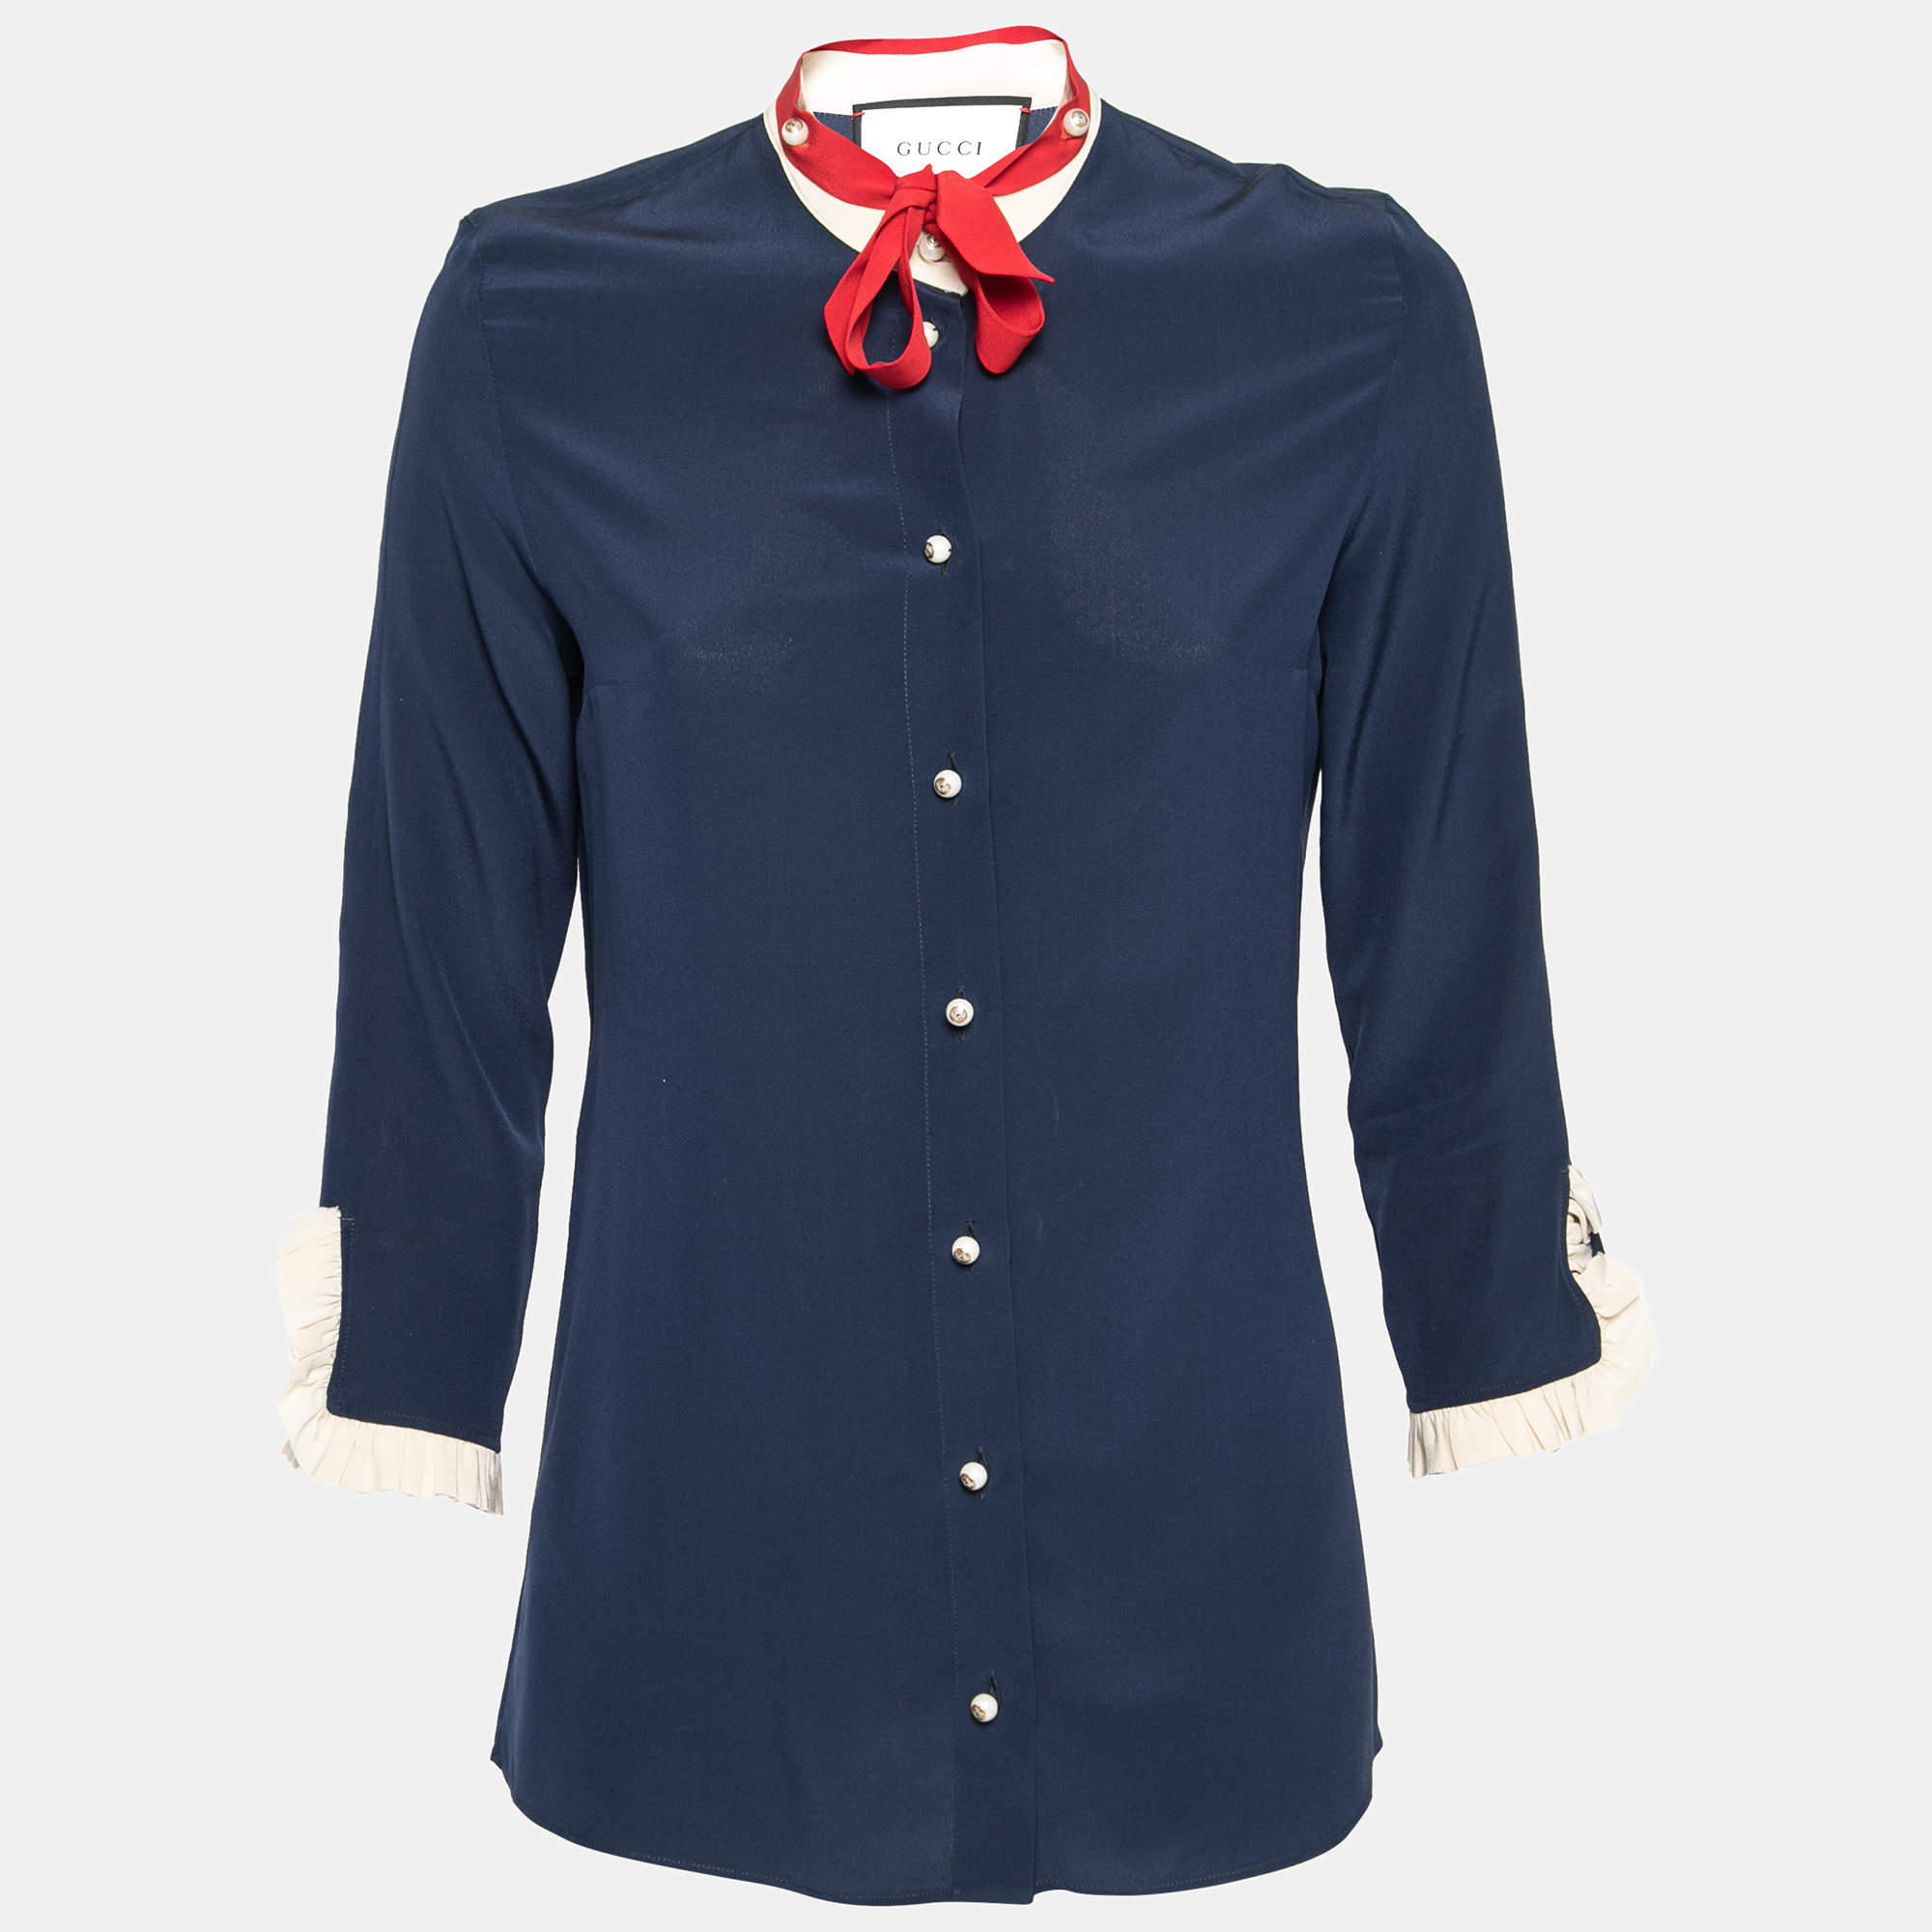 Gucci Navy Blue Silk Contrast Trim Neck Tie Detail Shirt M